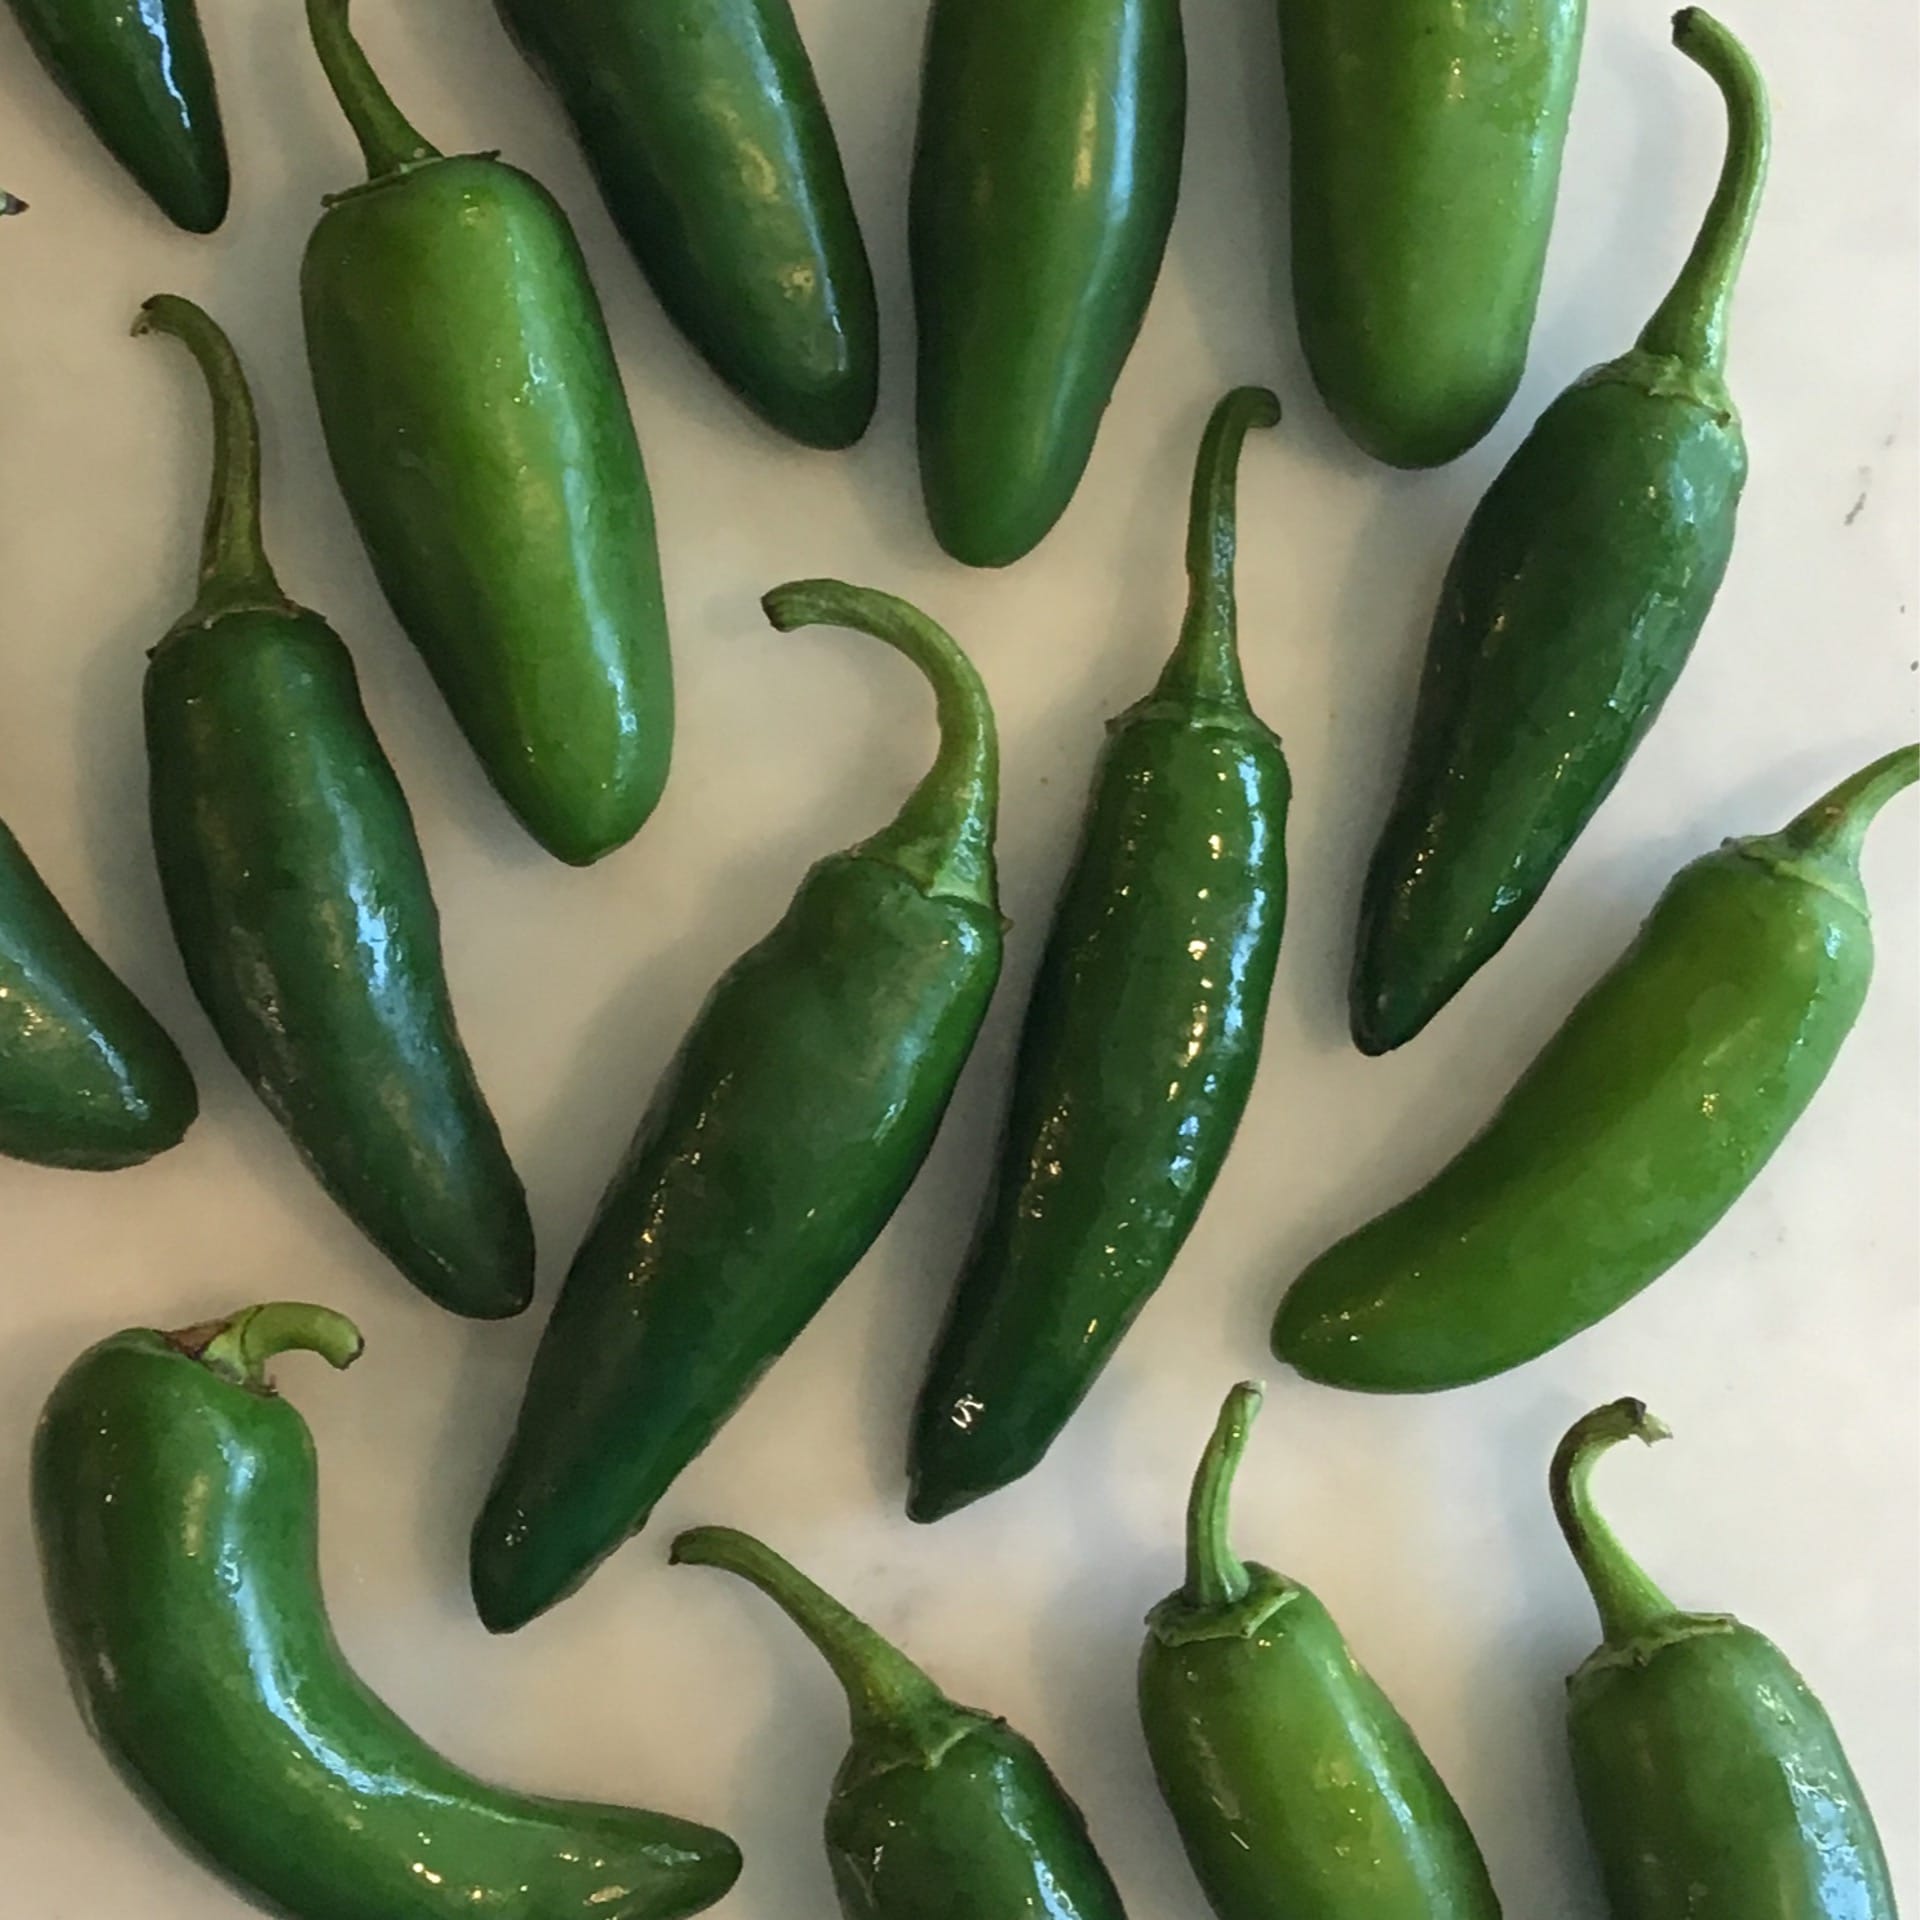 jalapeno peppers usda organic